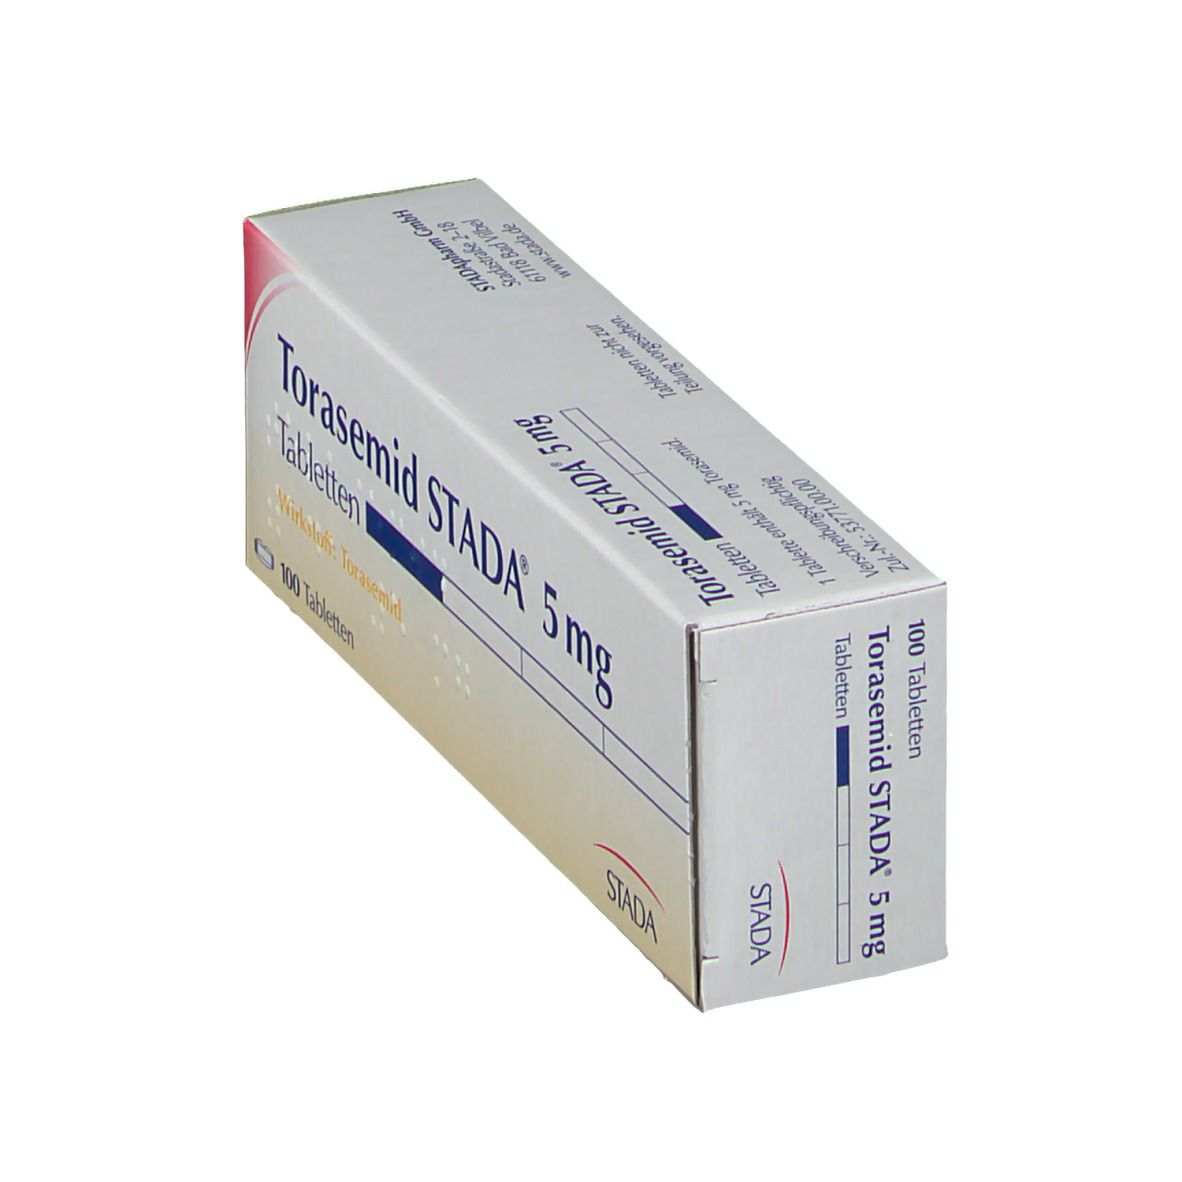 Torasemid STADA® 5 mg